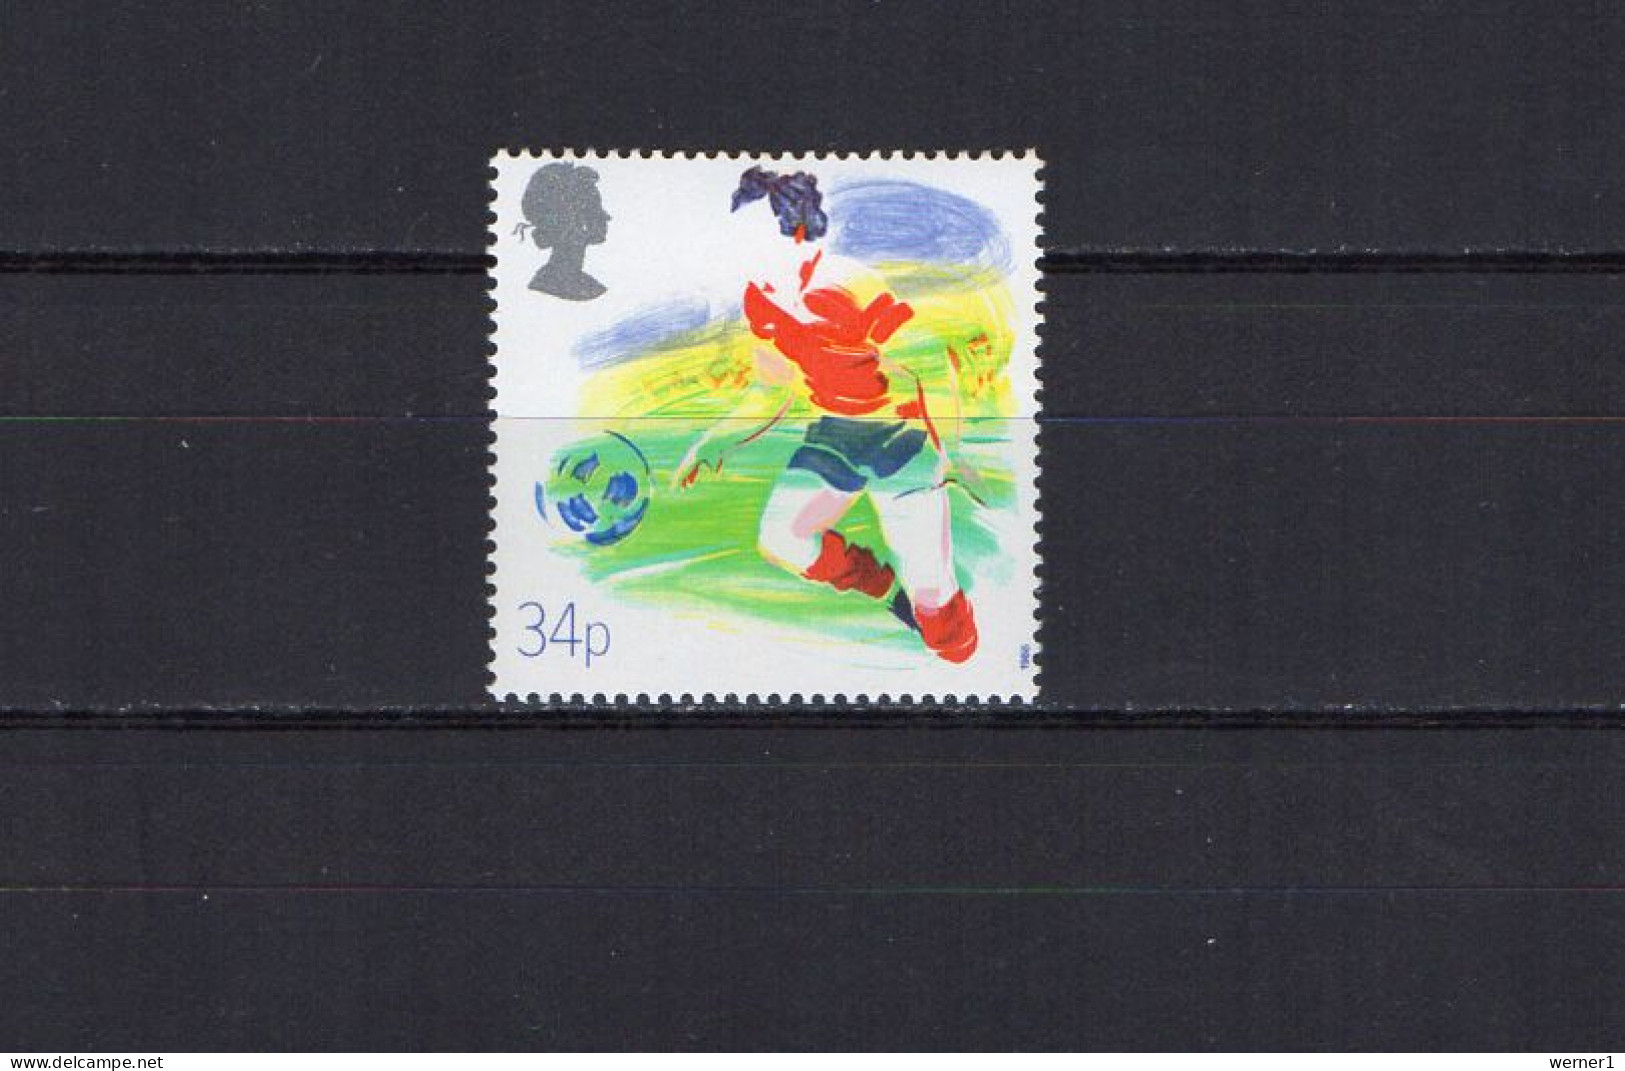 UK England, Great Britain 1988 Football Soccer Stamp MNH - Nuovi